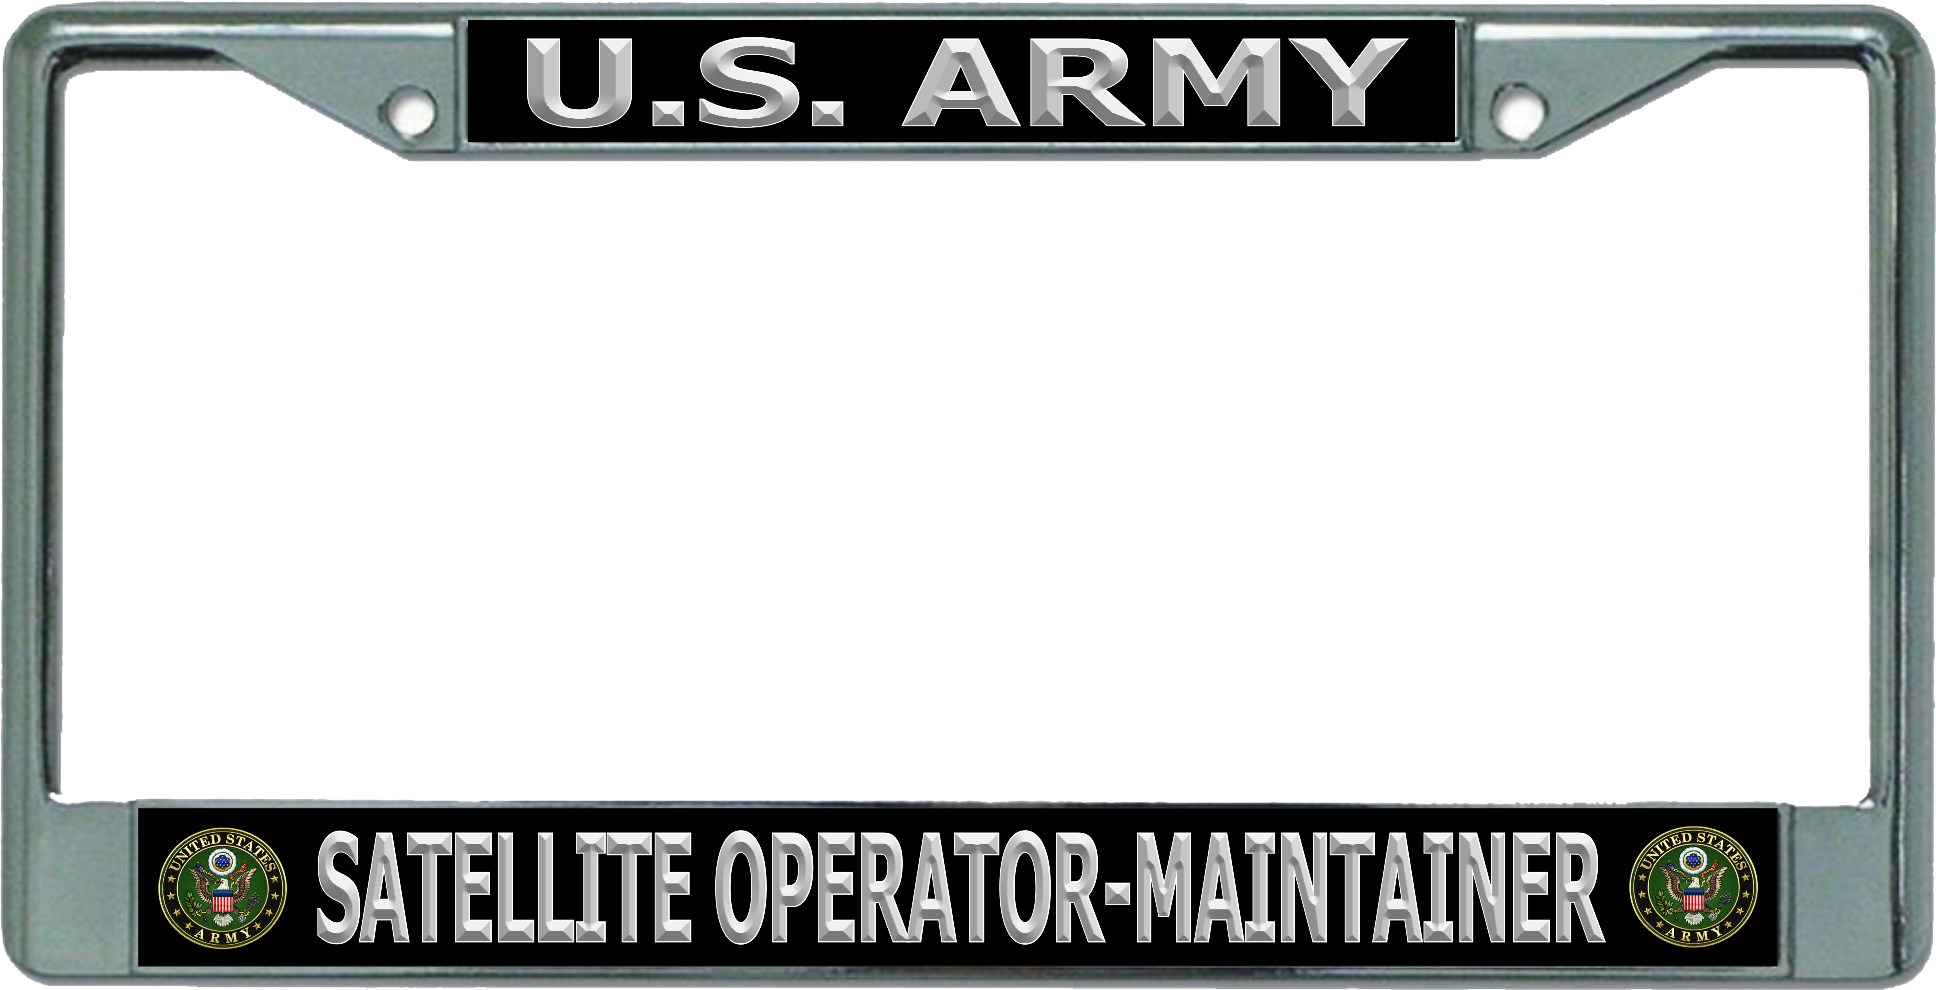 U.S. Army Satellite Operator-Maintainer Chrome License Plate FRAME